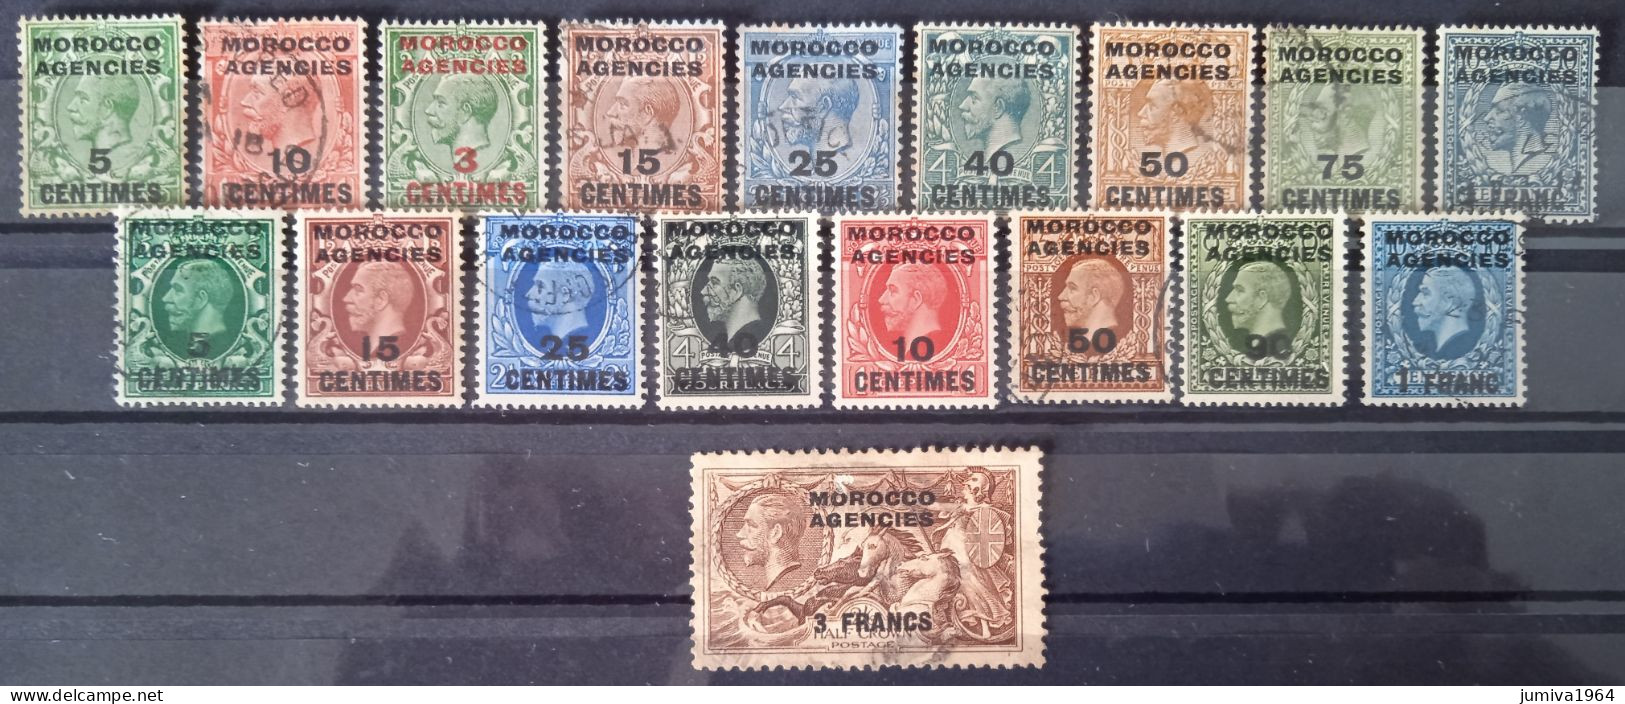 UK - Morocco - Maroc - Marruecos - Zone Française N°1 - TB - Bureaux Au Maroc / Tanger (...-1958)